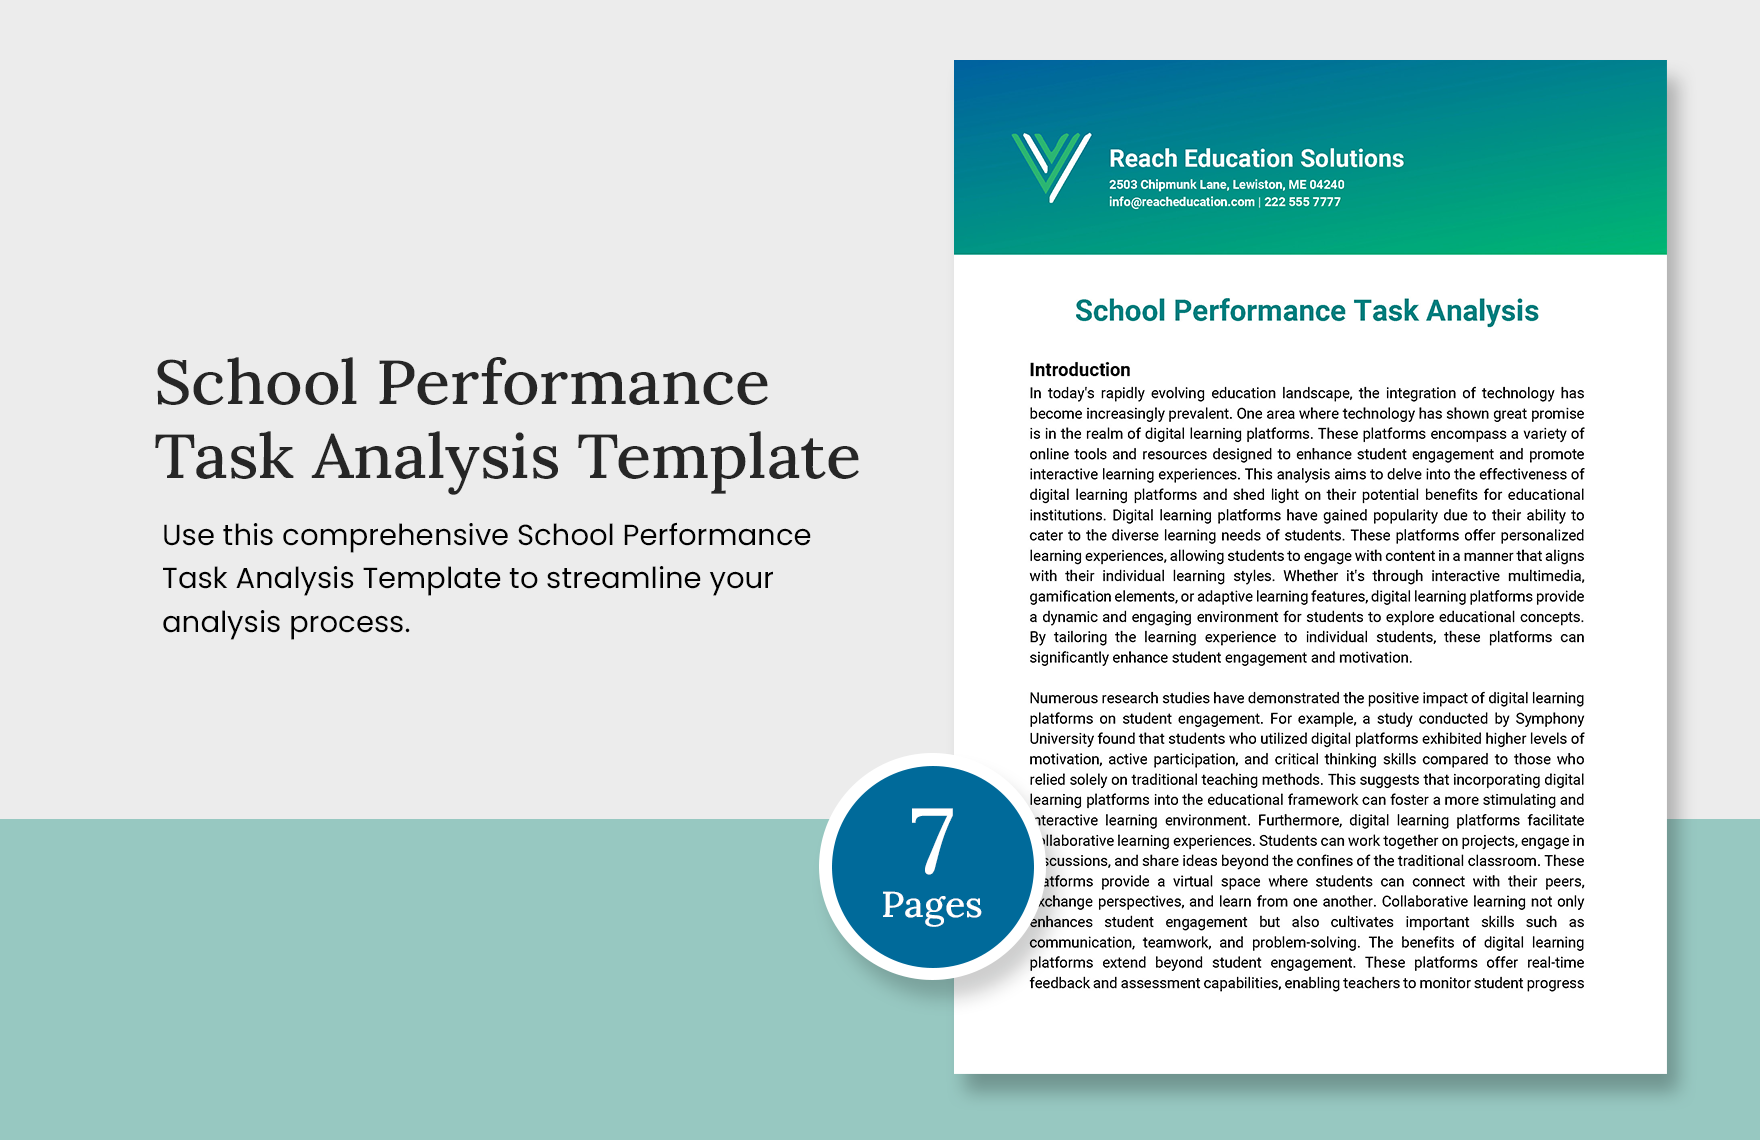 School Performance Task Analysis Template